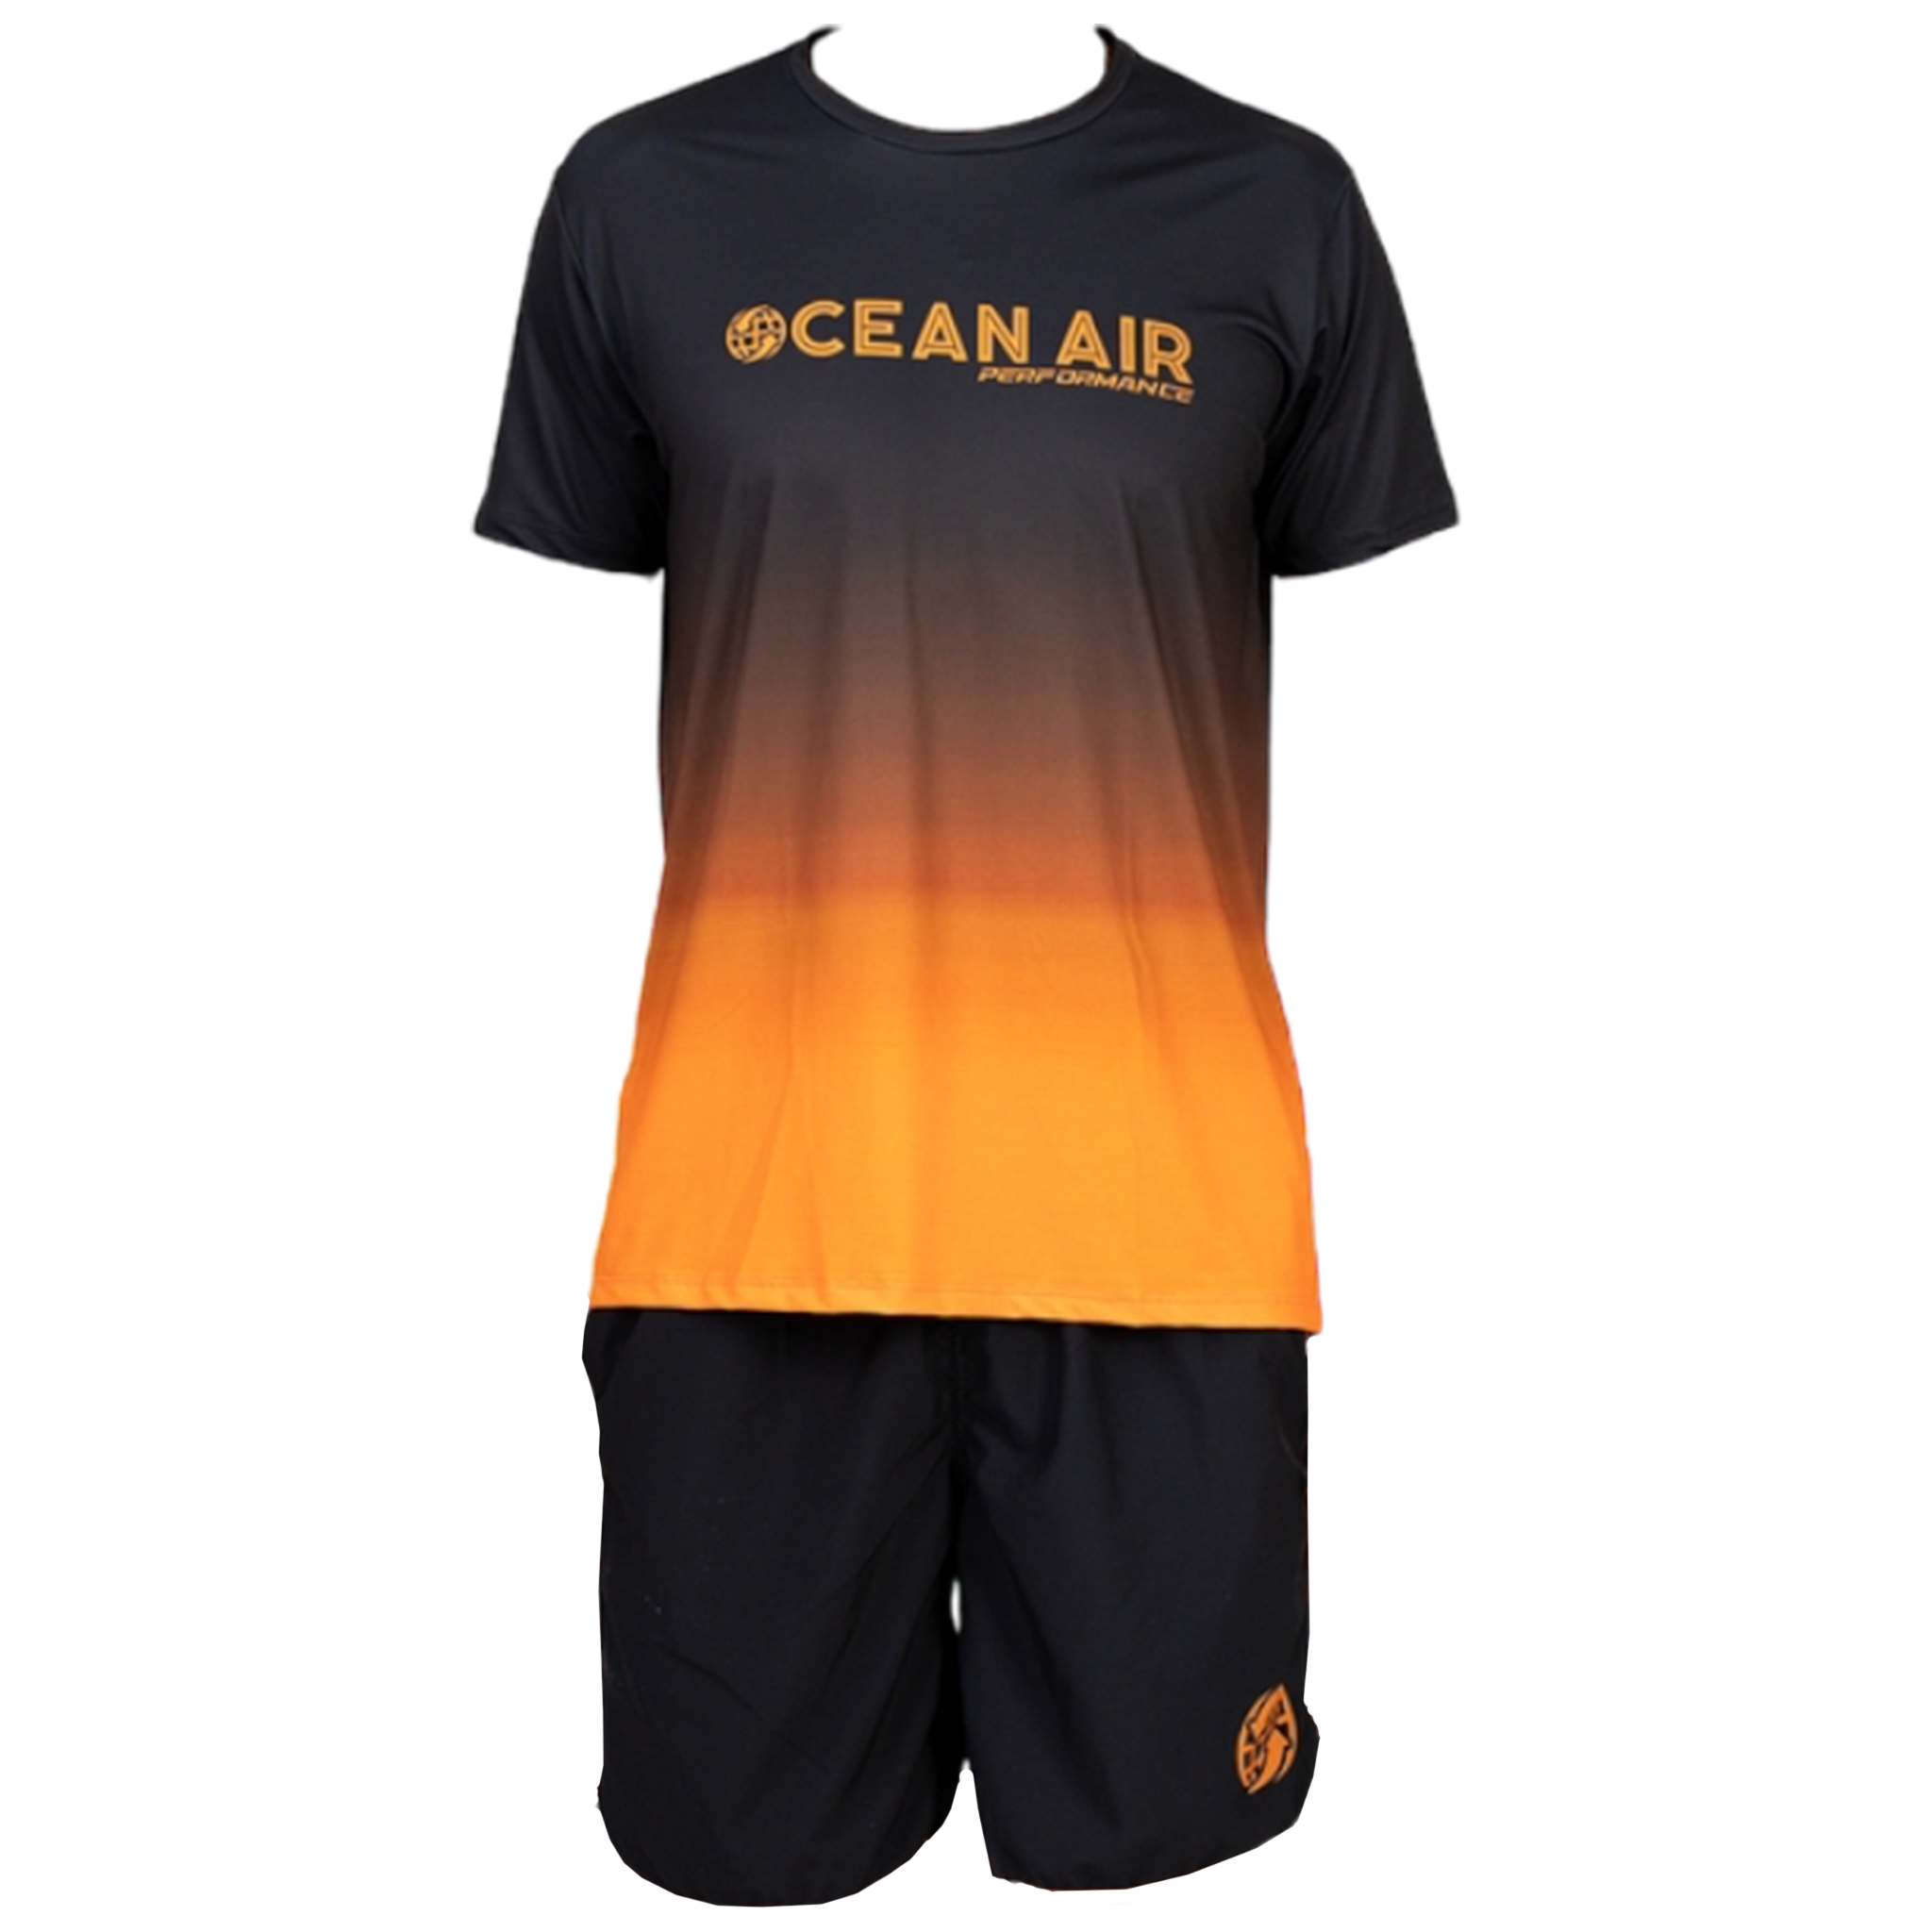 Ocean Air Ombre Set Fall Colletion - Black / Orange